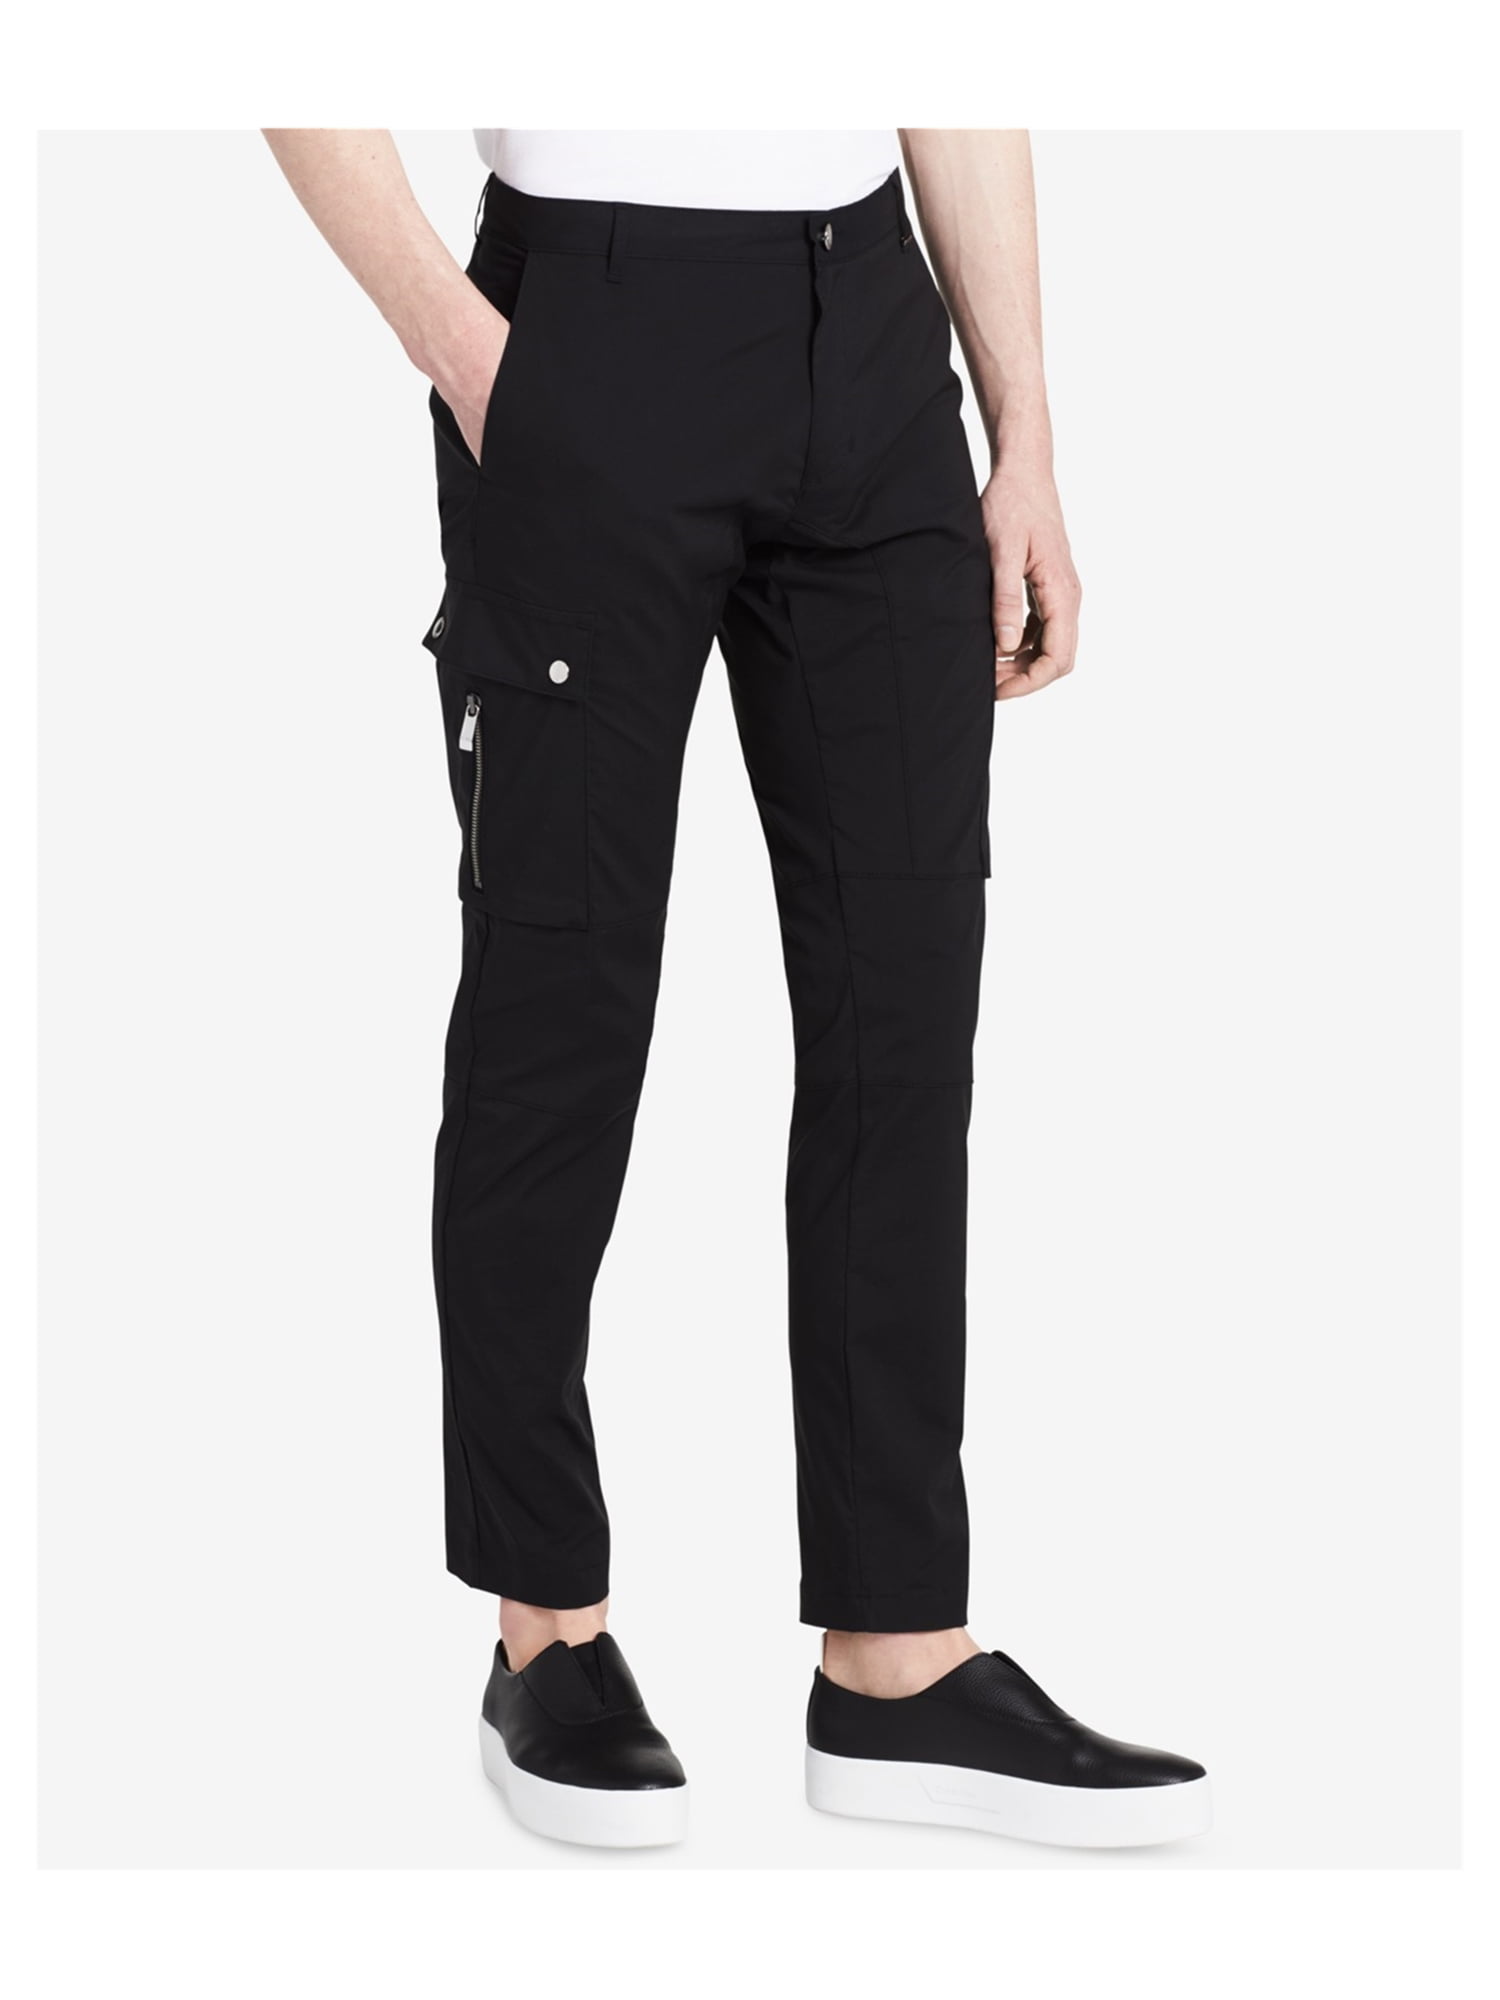 Calvin Klein Mens Modern Casual Cargo Pants black 30x32 | Walmart Canada